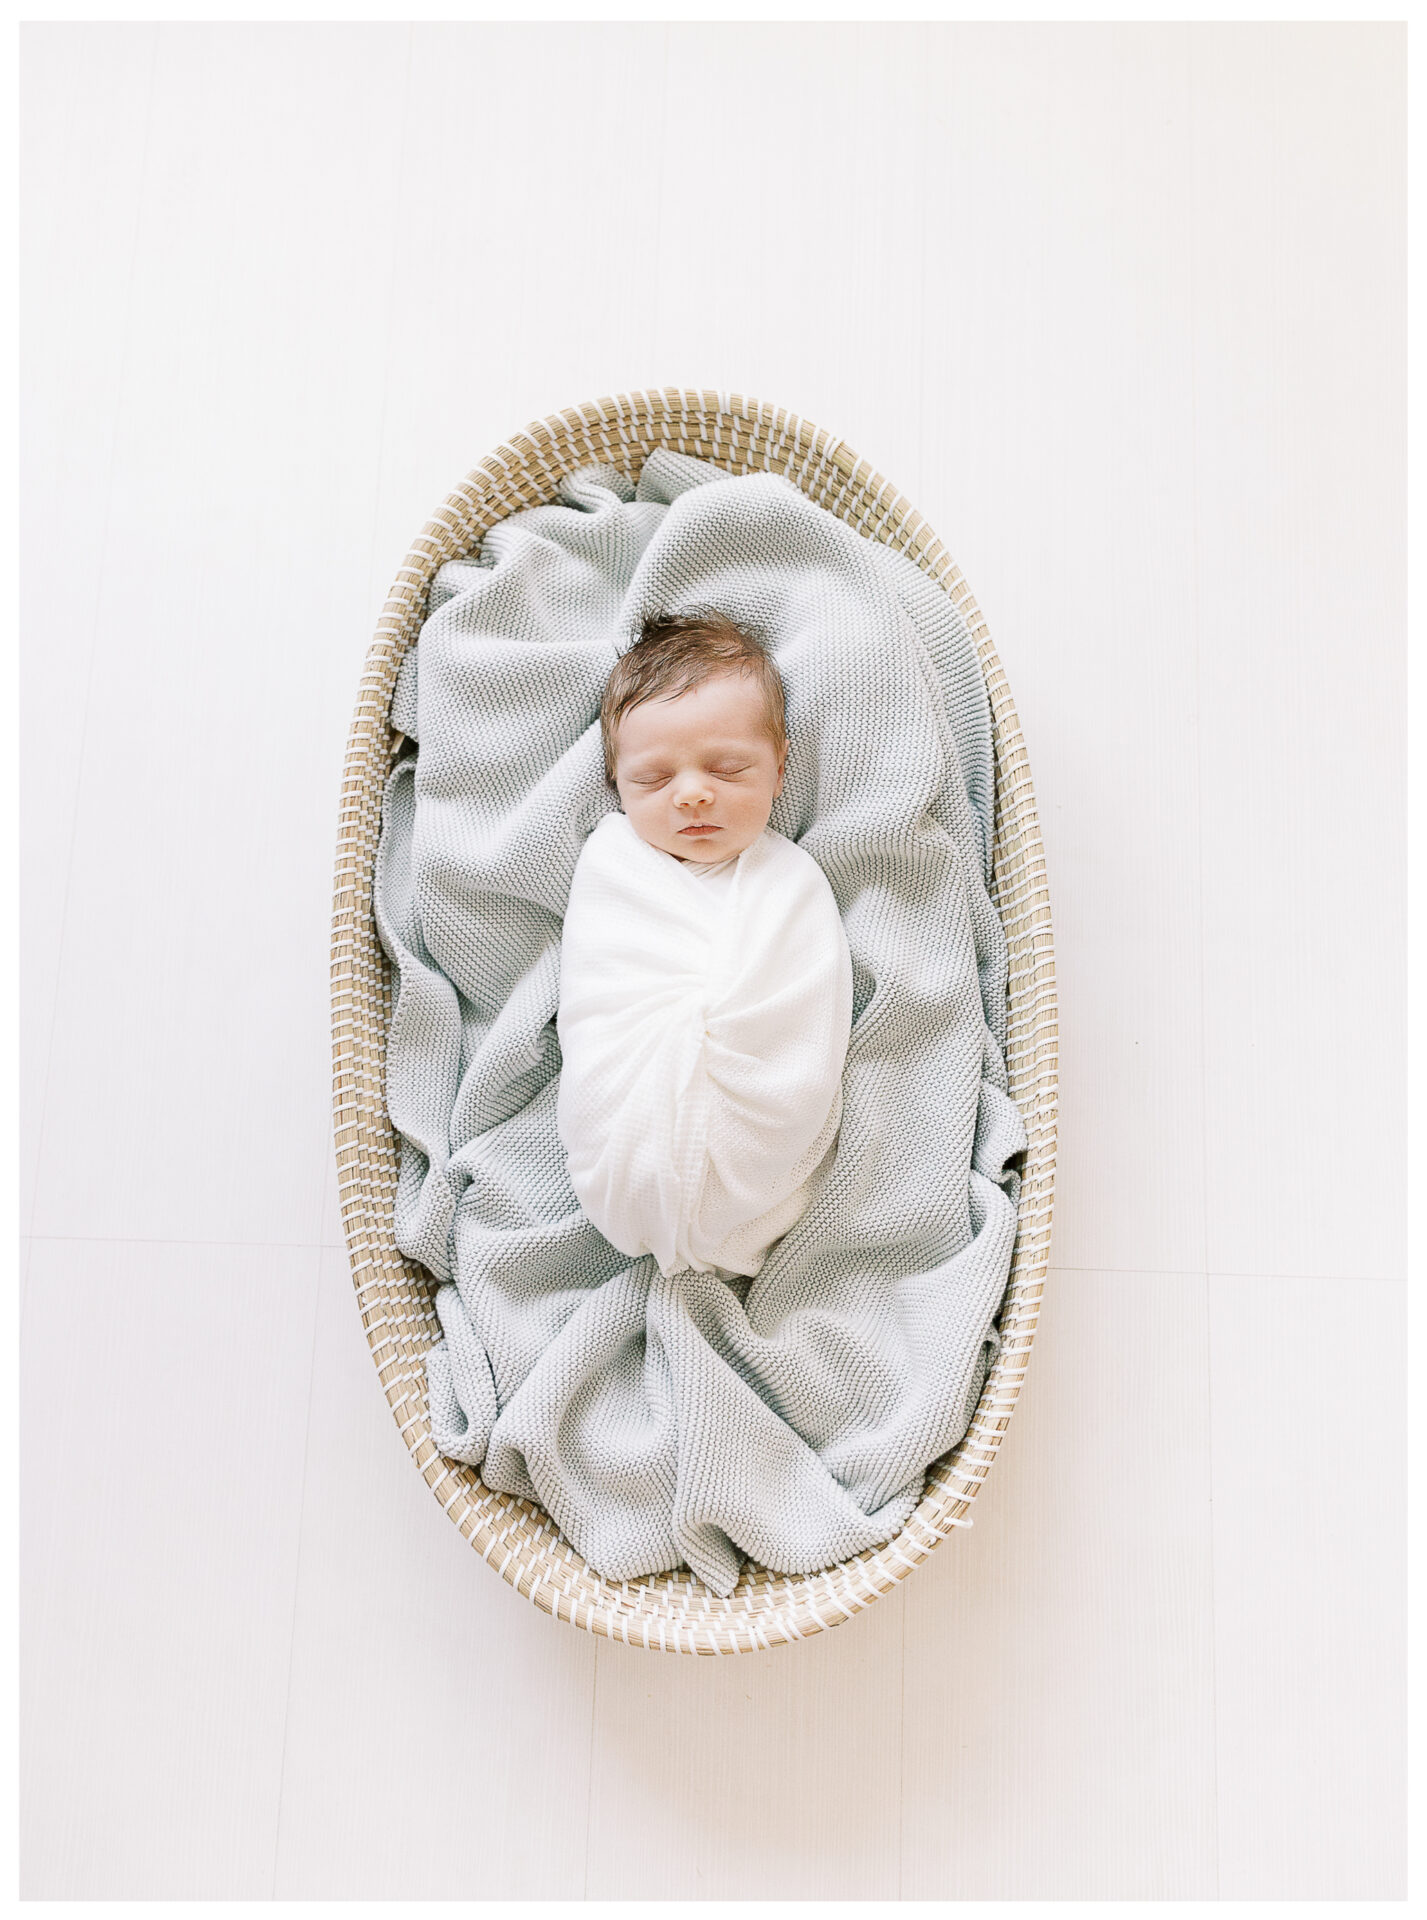 Winter Freire Photography | Newborn Studio Session | Organic Timeless Elegant lifestyle newborn session with family | Cincinnati, Dayton, Columbus Ohio and surrounding areas